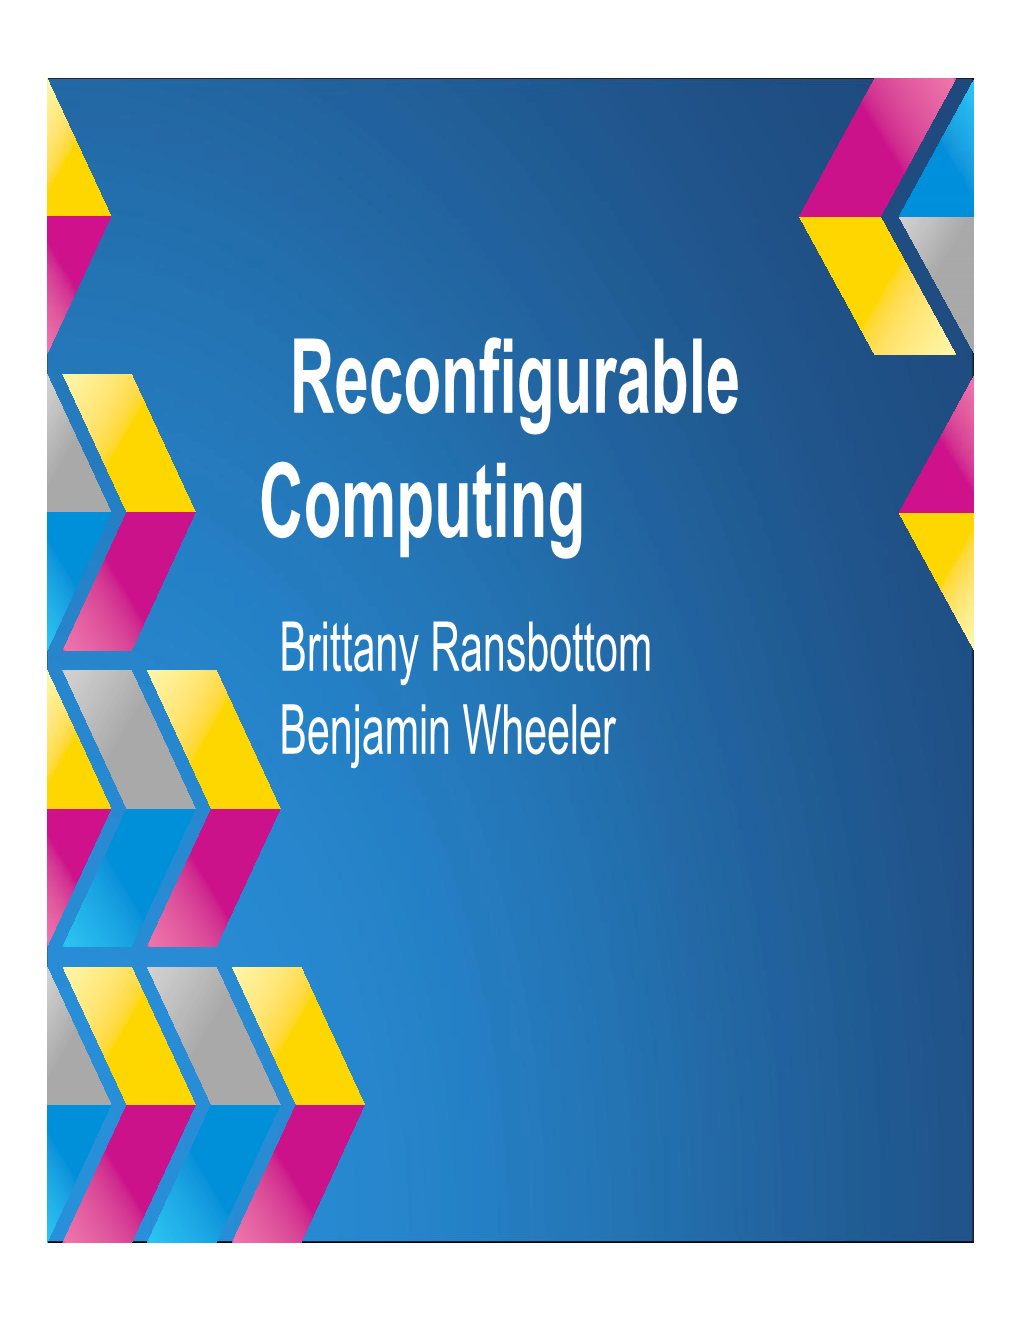 Reconfigurable Computing Brittany Ransbottom Benjamin Wheeler What Is Reconfigurable Computing?